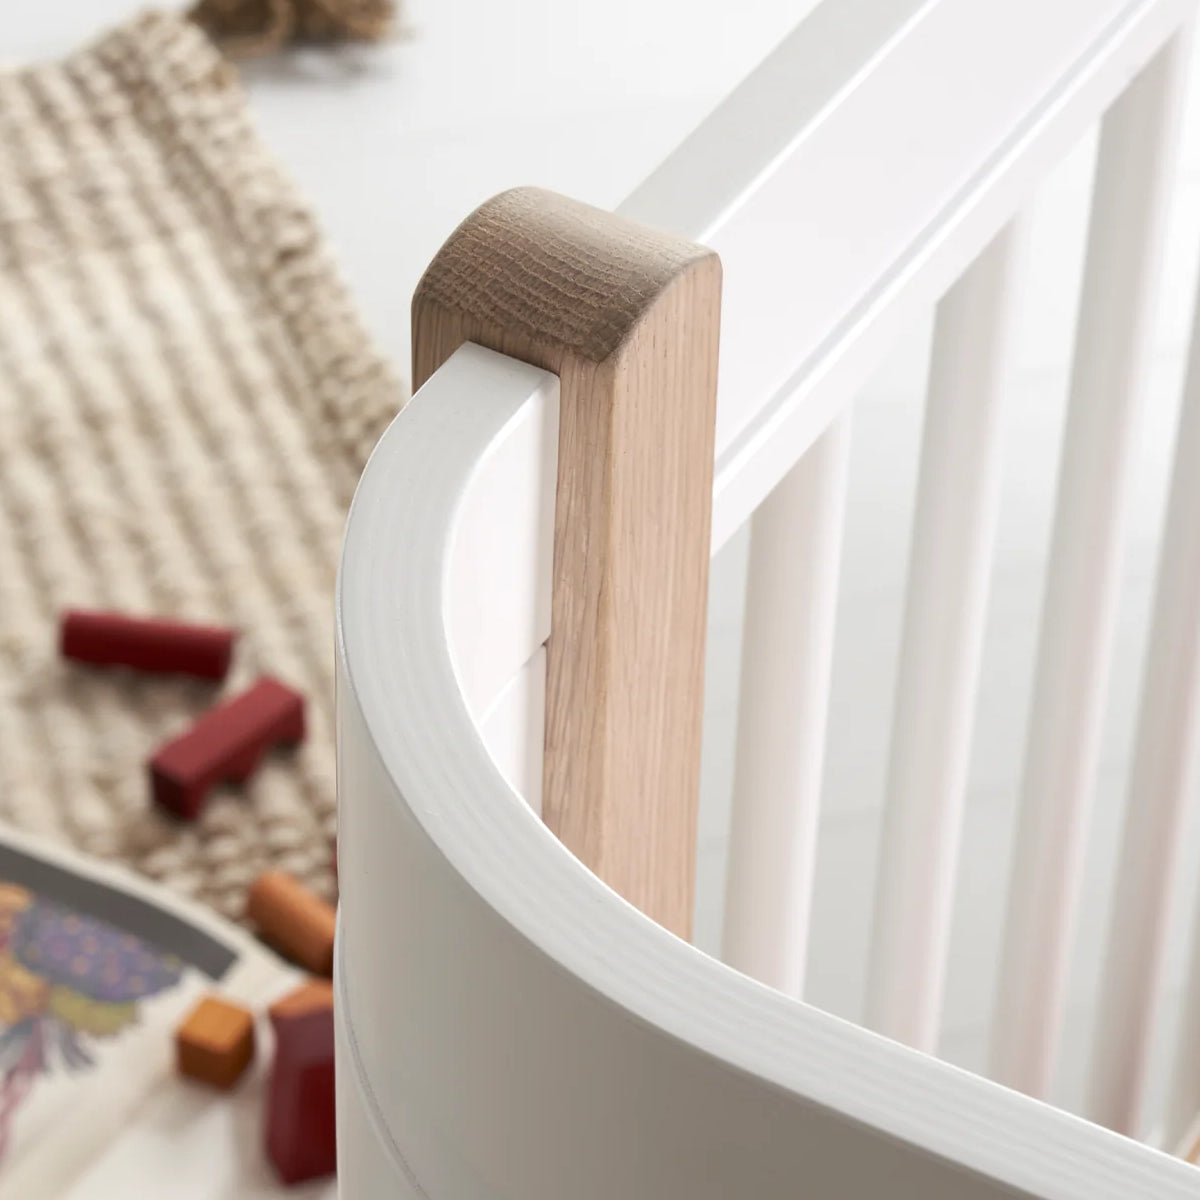 Oliver Furniture Wood mini+ Babybett exkl. Umbauteile weiß/Eiche